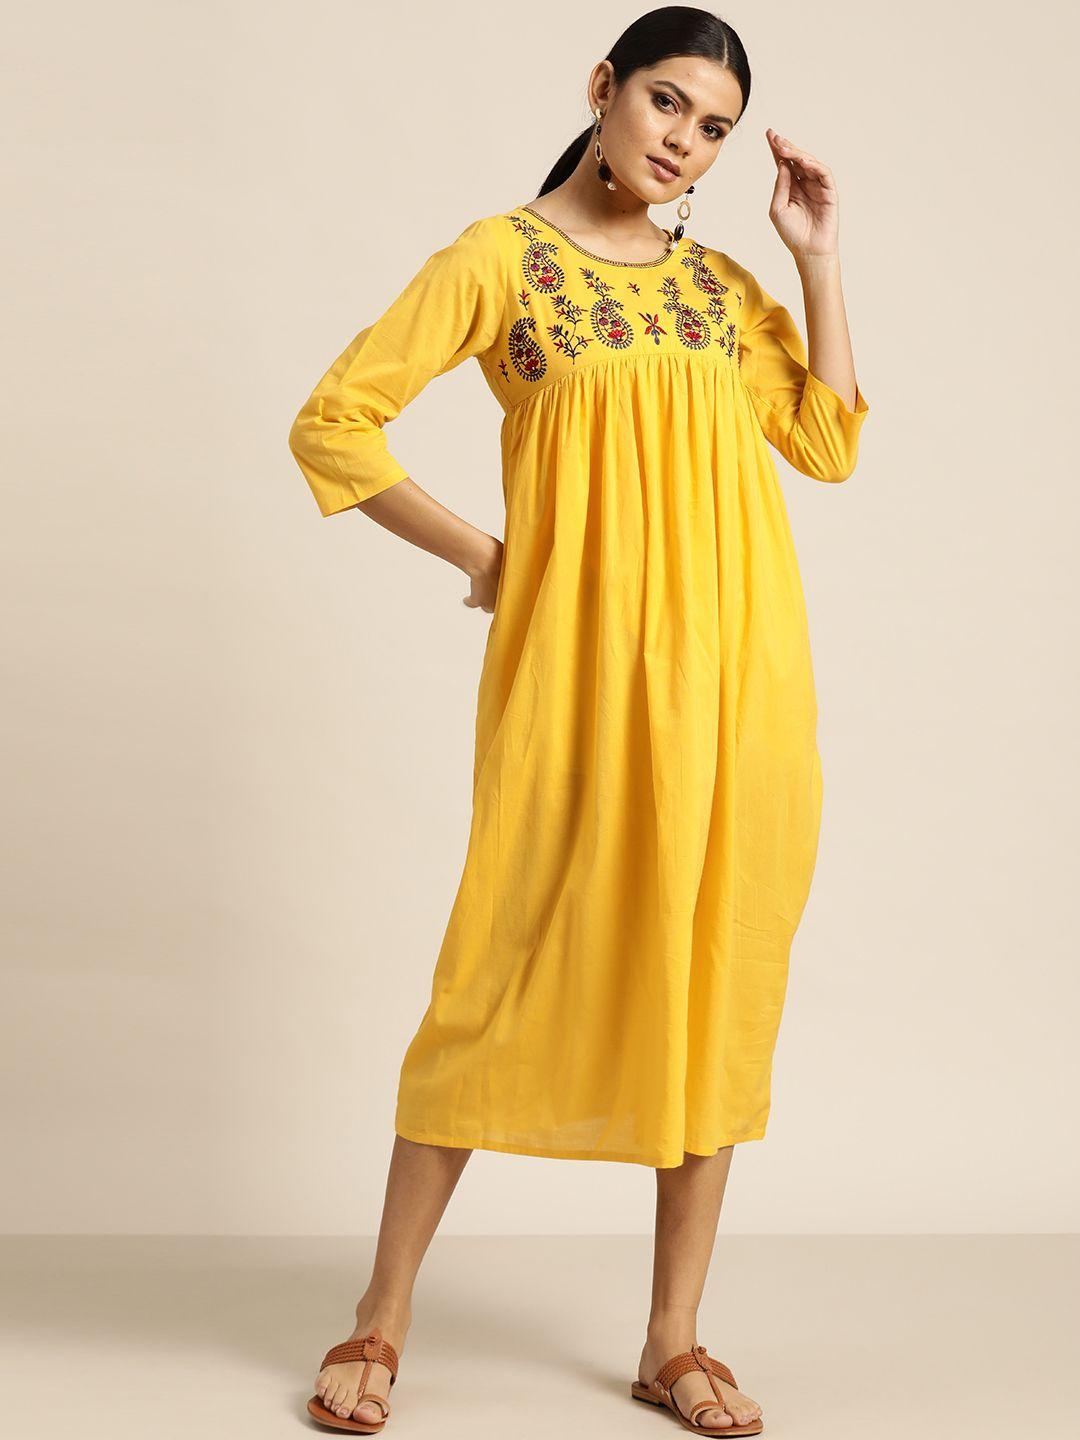 shae by sassafras mustard yellow & maroon embroidered pure cotton ethnic empire dress